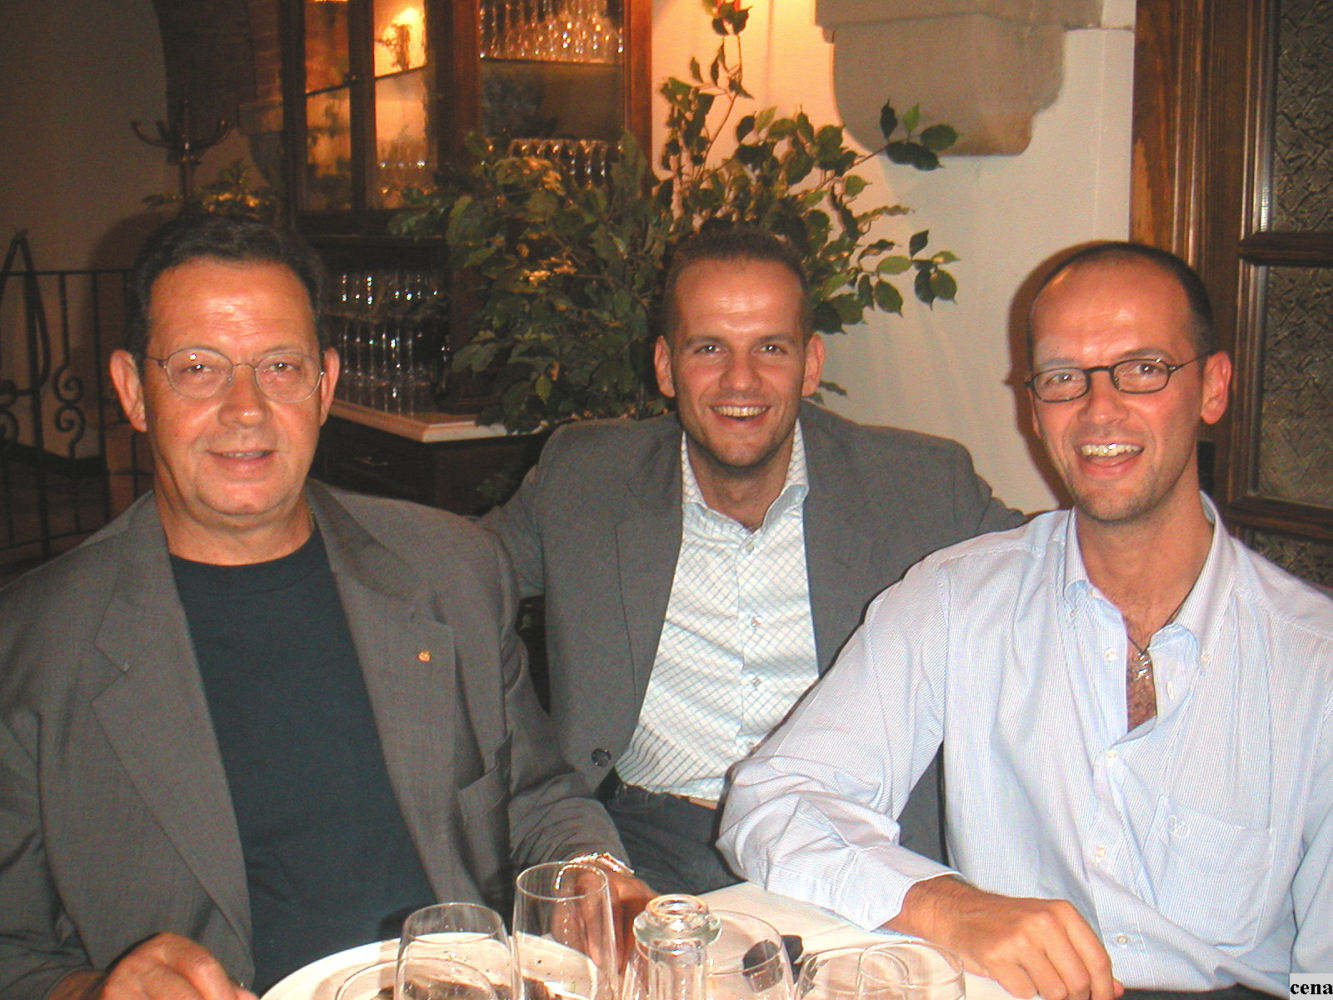 Bianchi family: Enzo Bianchi, Dino Bianchi, Gianfranco Bianchi (from left to right)